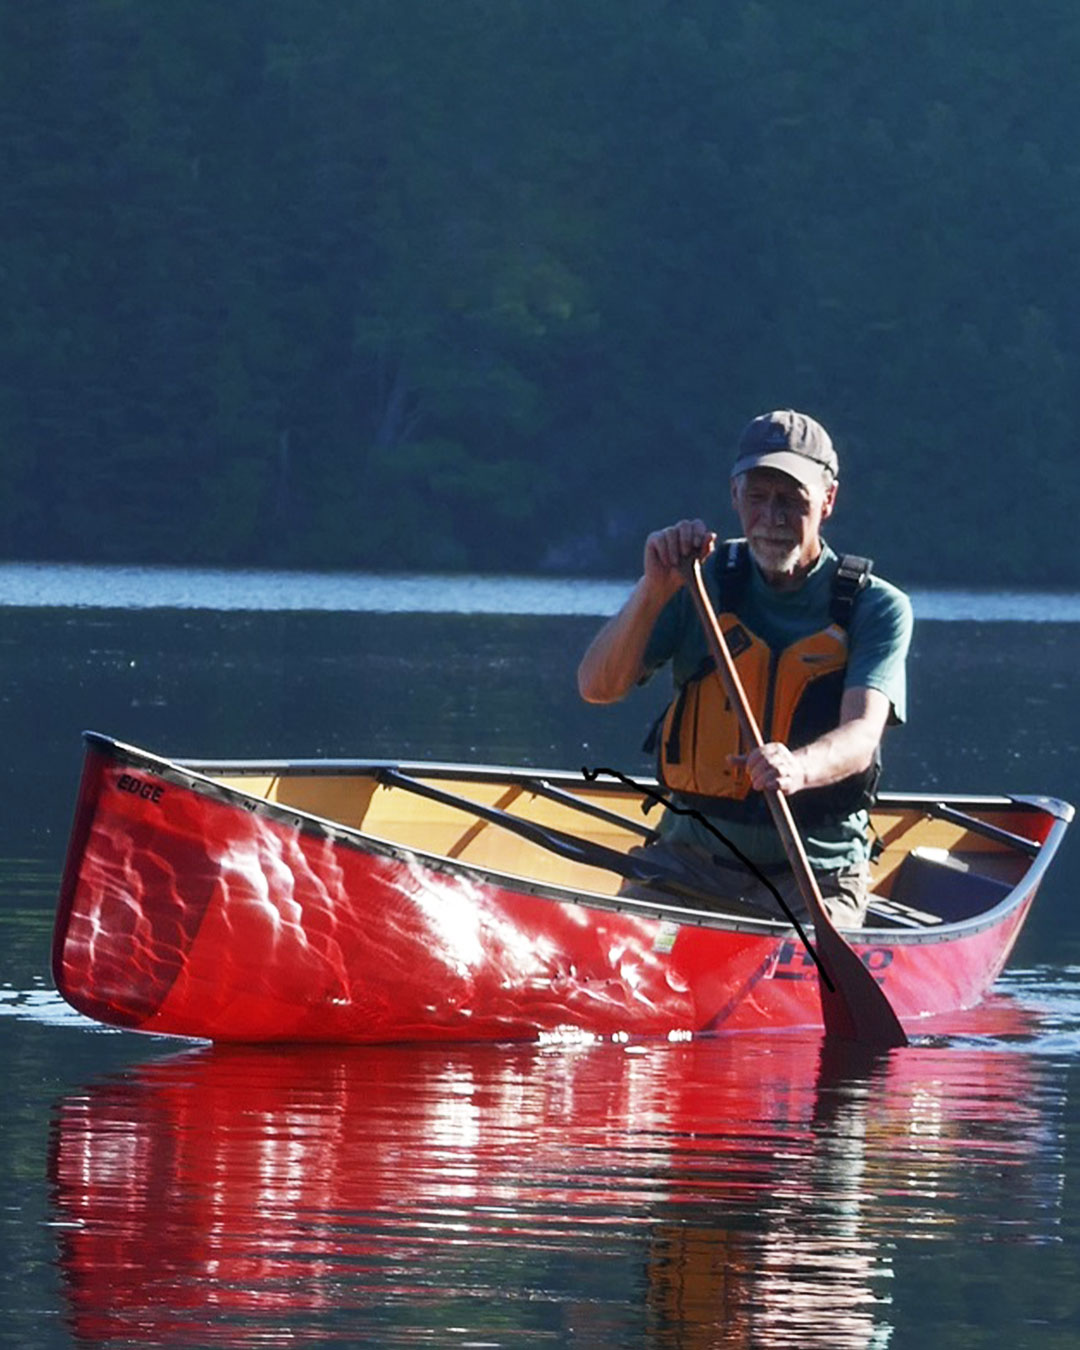 H2O Canoe Company Slideshow - Paddling Red Canoe Solo